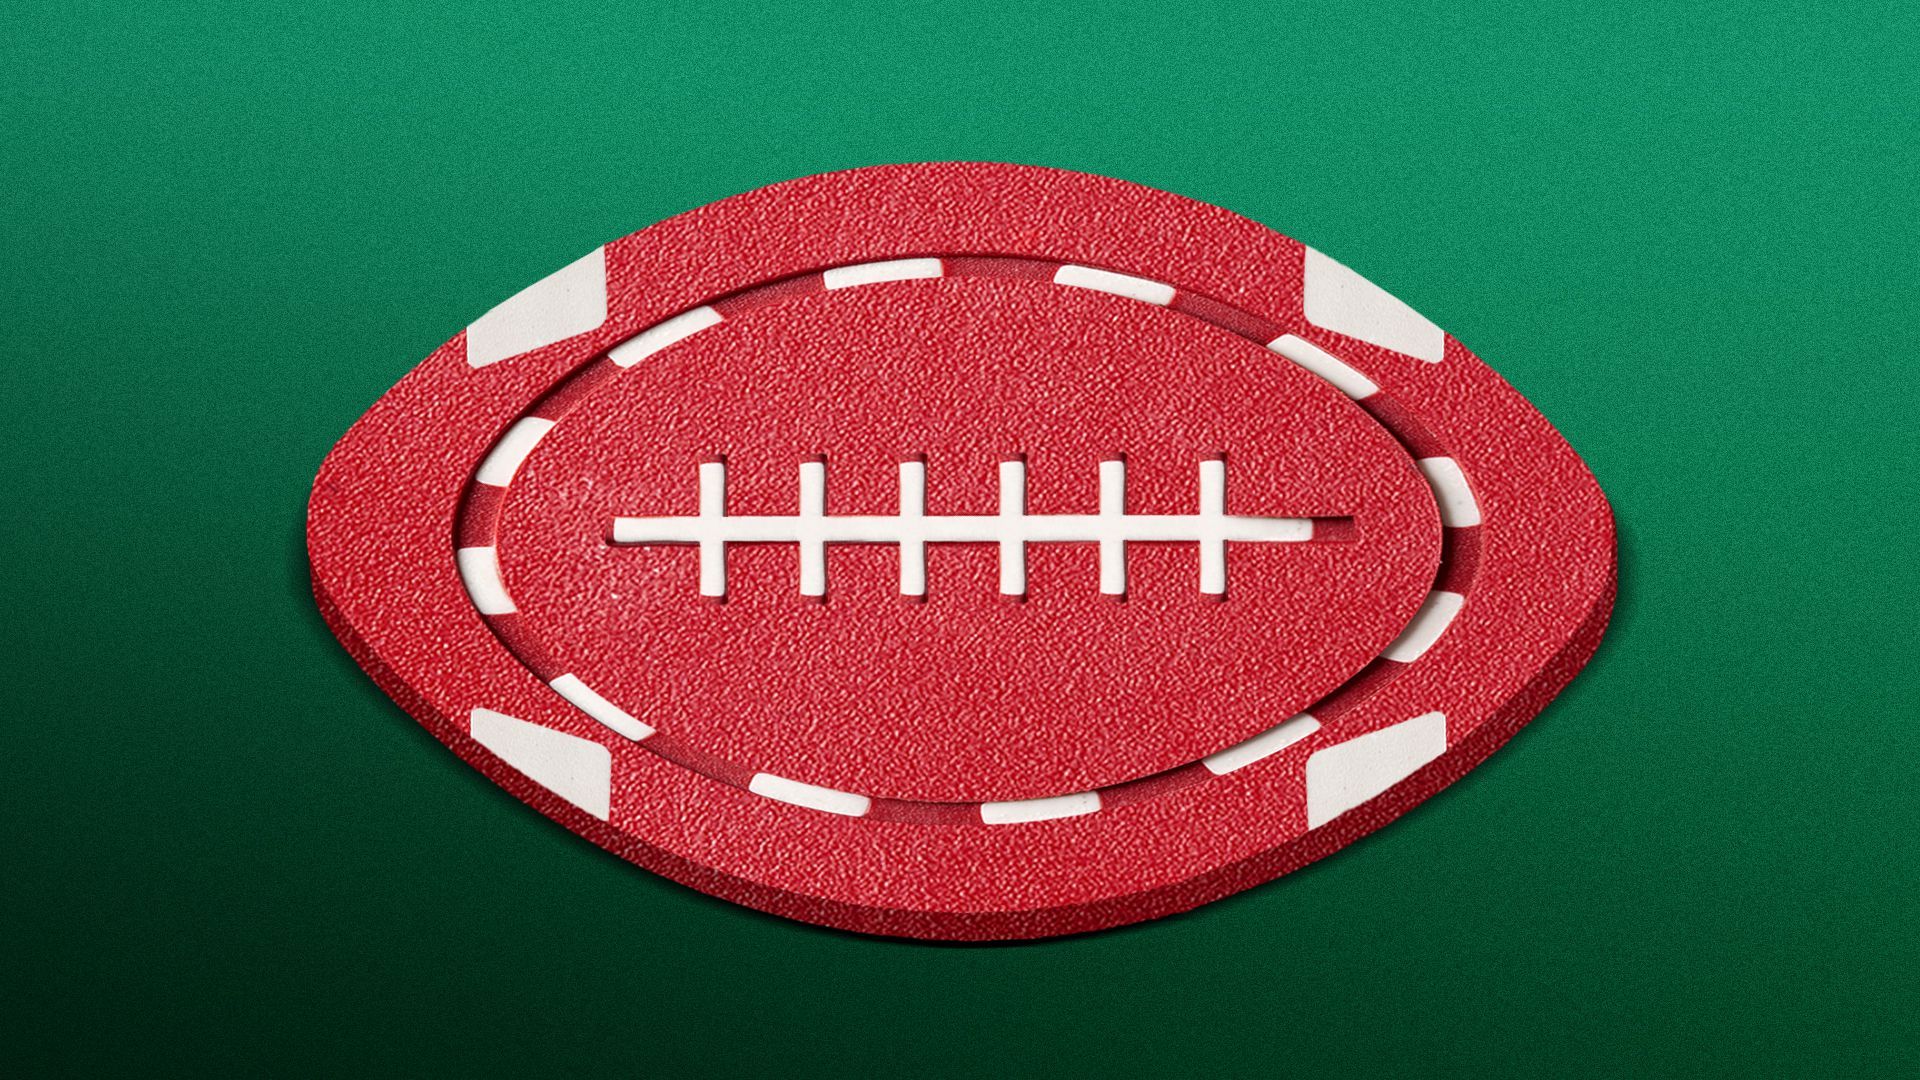 Illustration of a poker chip shaped like a football